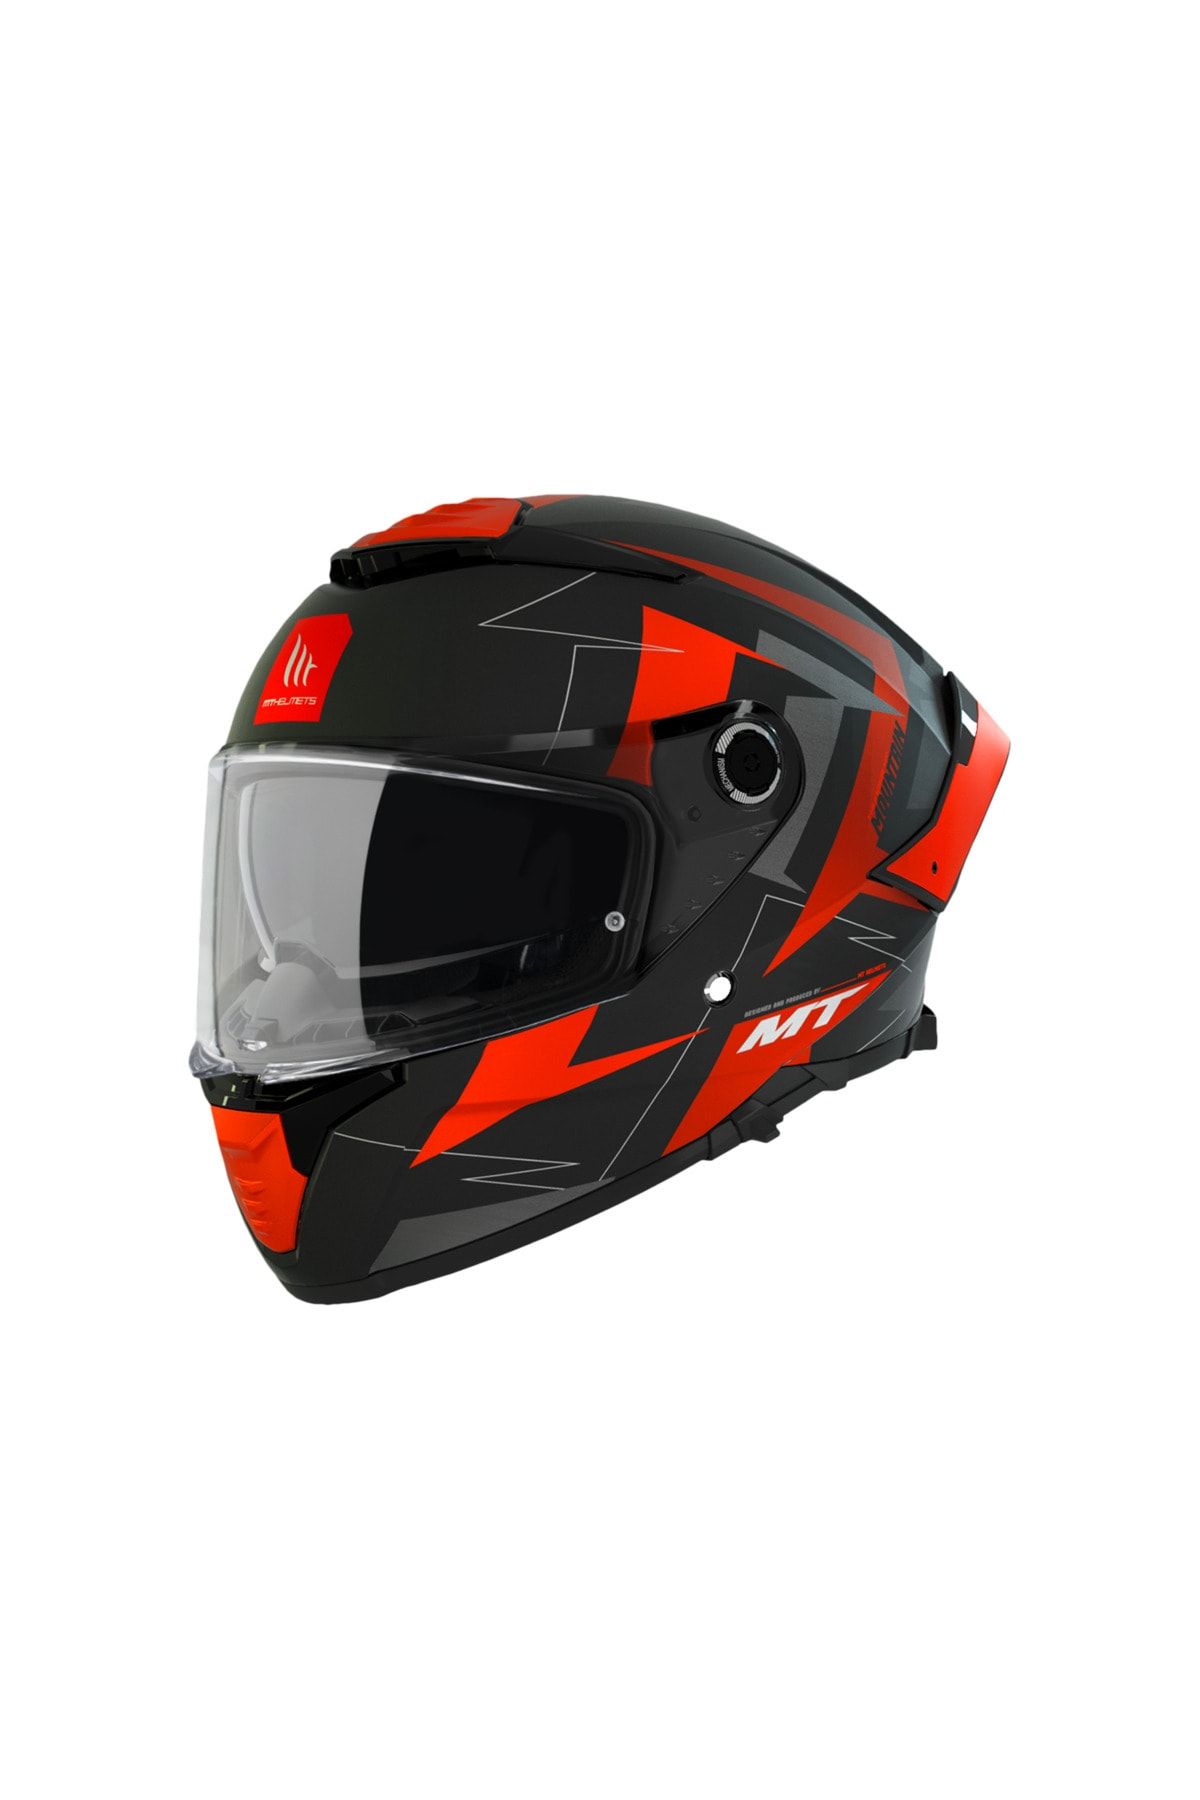 MT Helmets Thunder 4 Sv Mountain C5 Mat Red Full Face Kapalı Kask ŞEFFAF VİZÖRLÜ